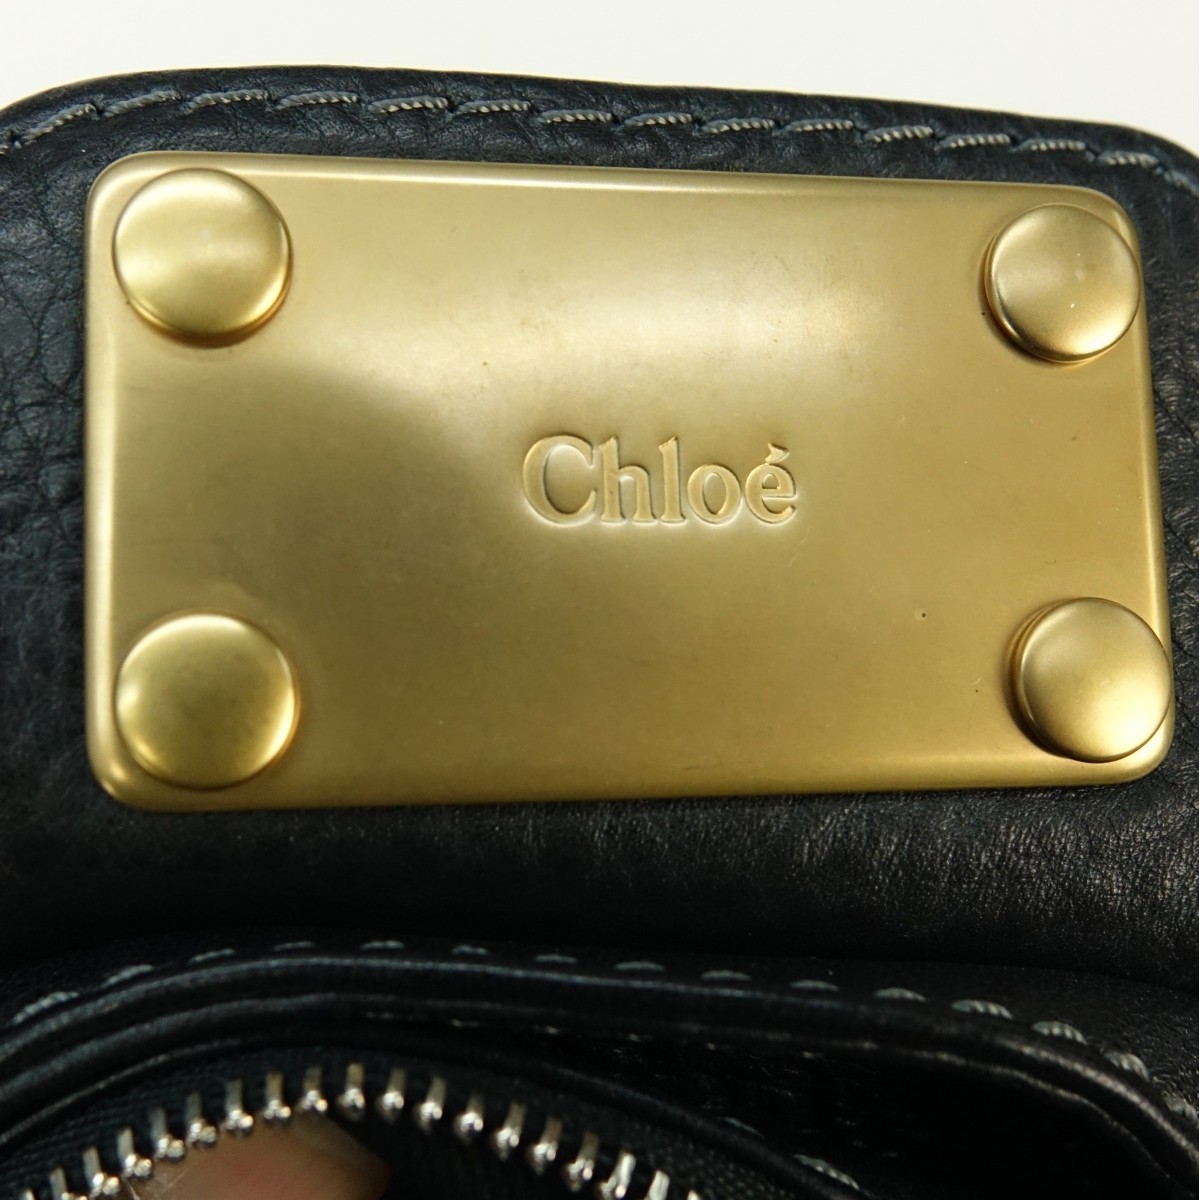 Chloe Black Leather Paddington MM Bag